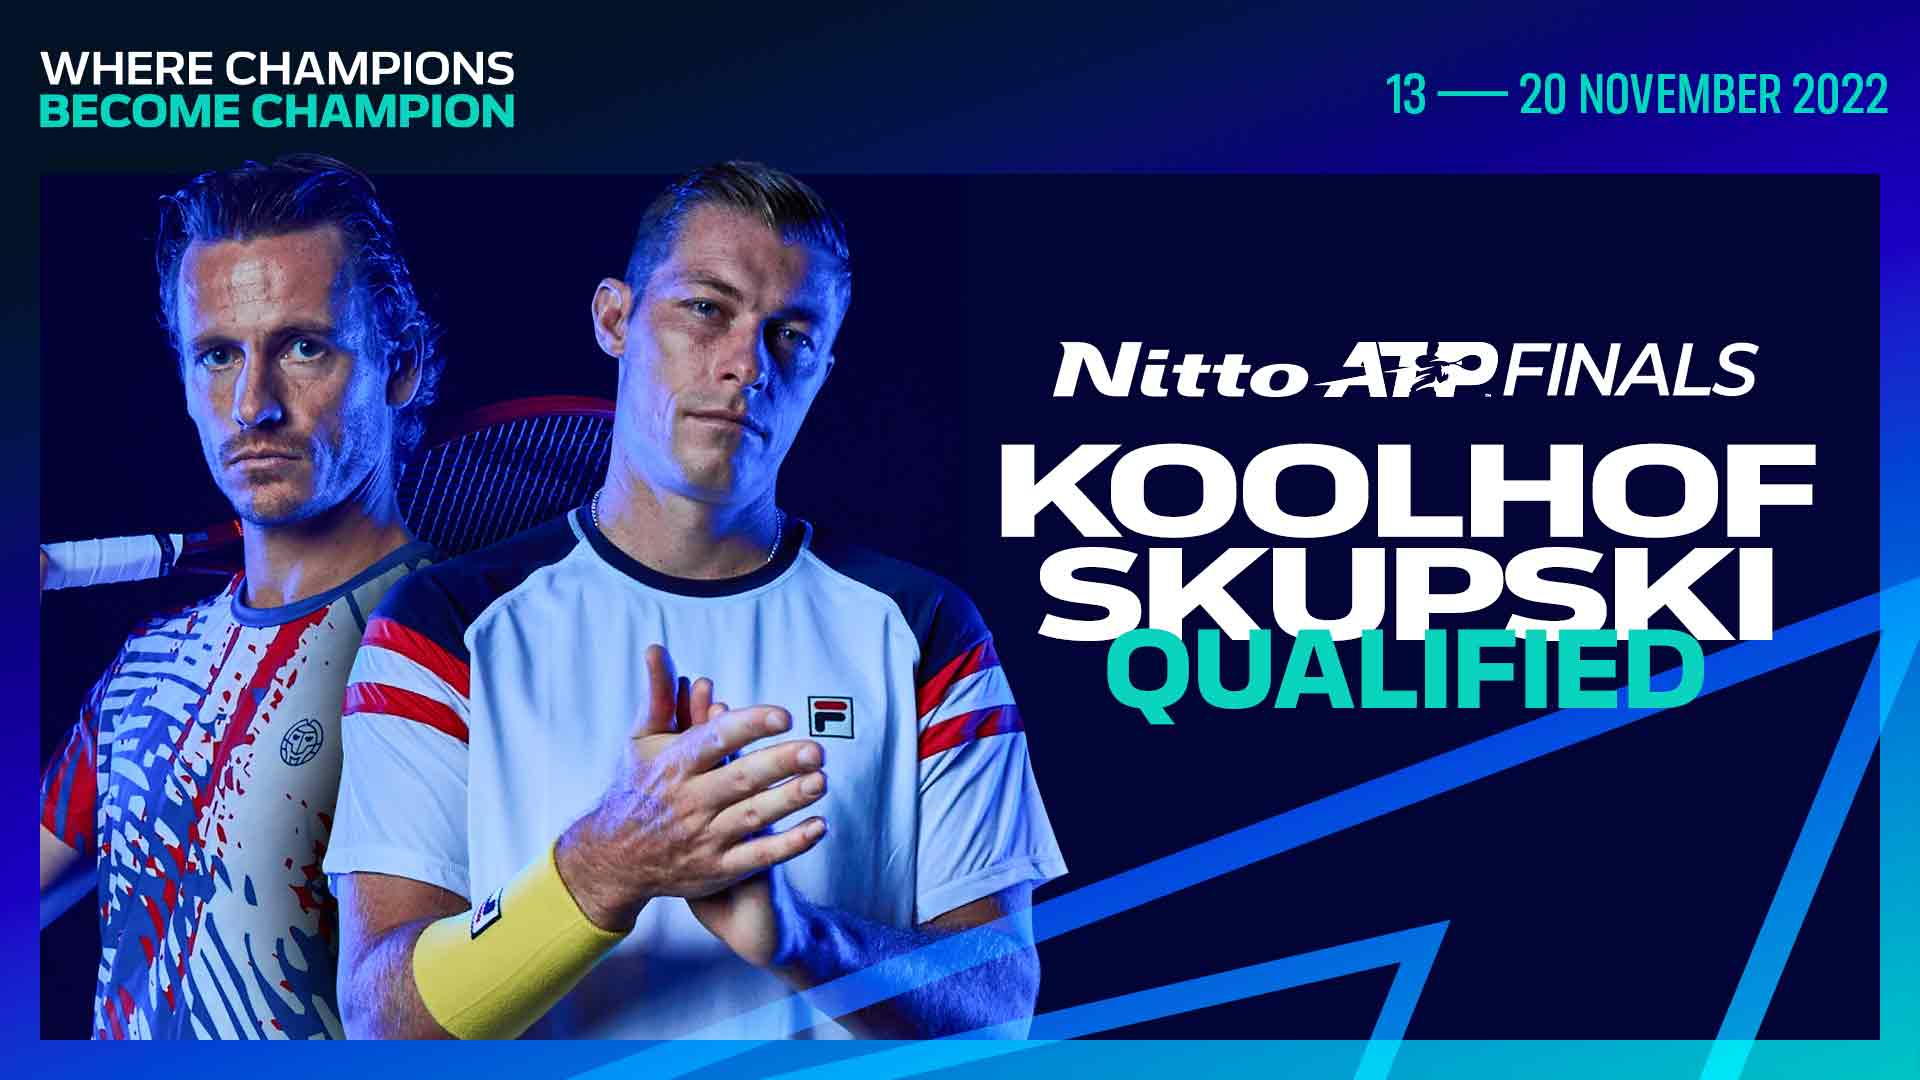 ATP Finals - Wikipedia